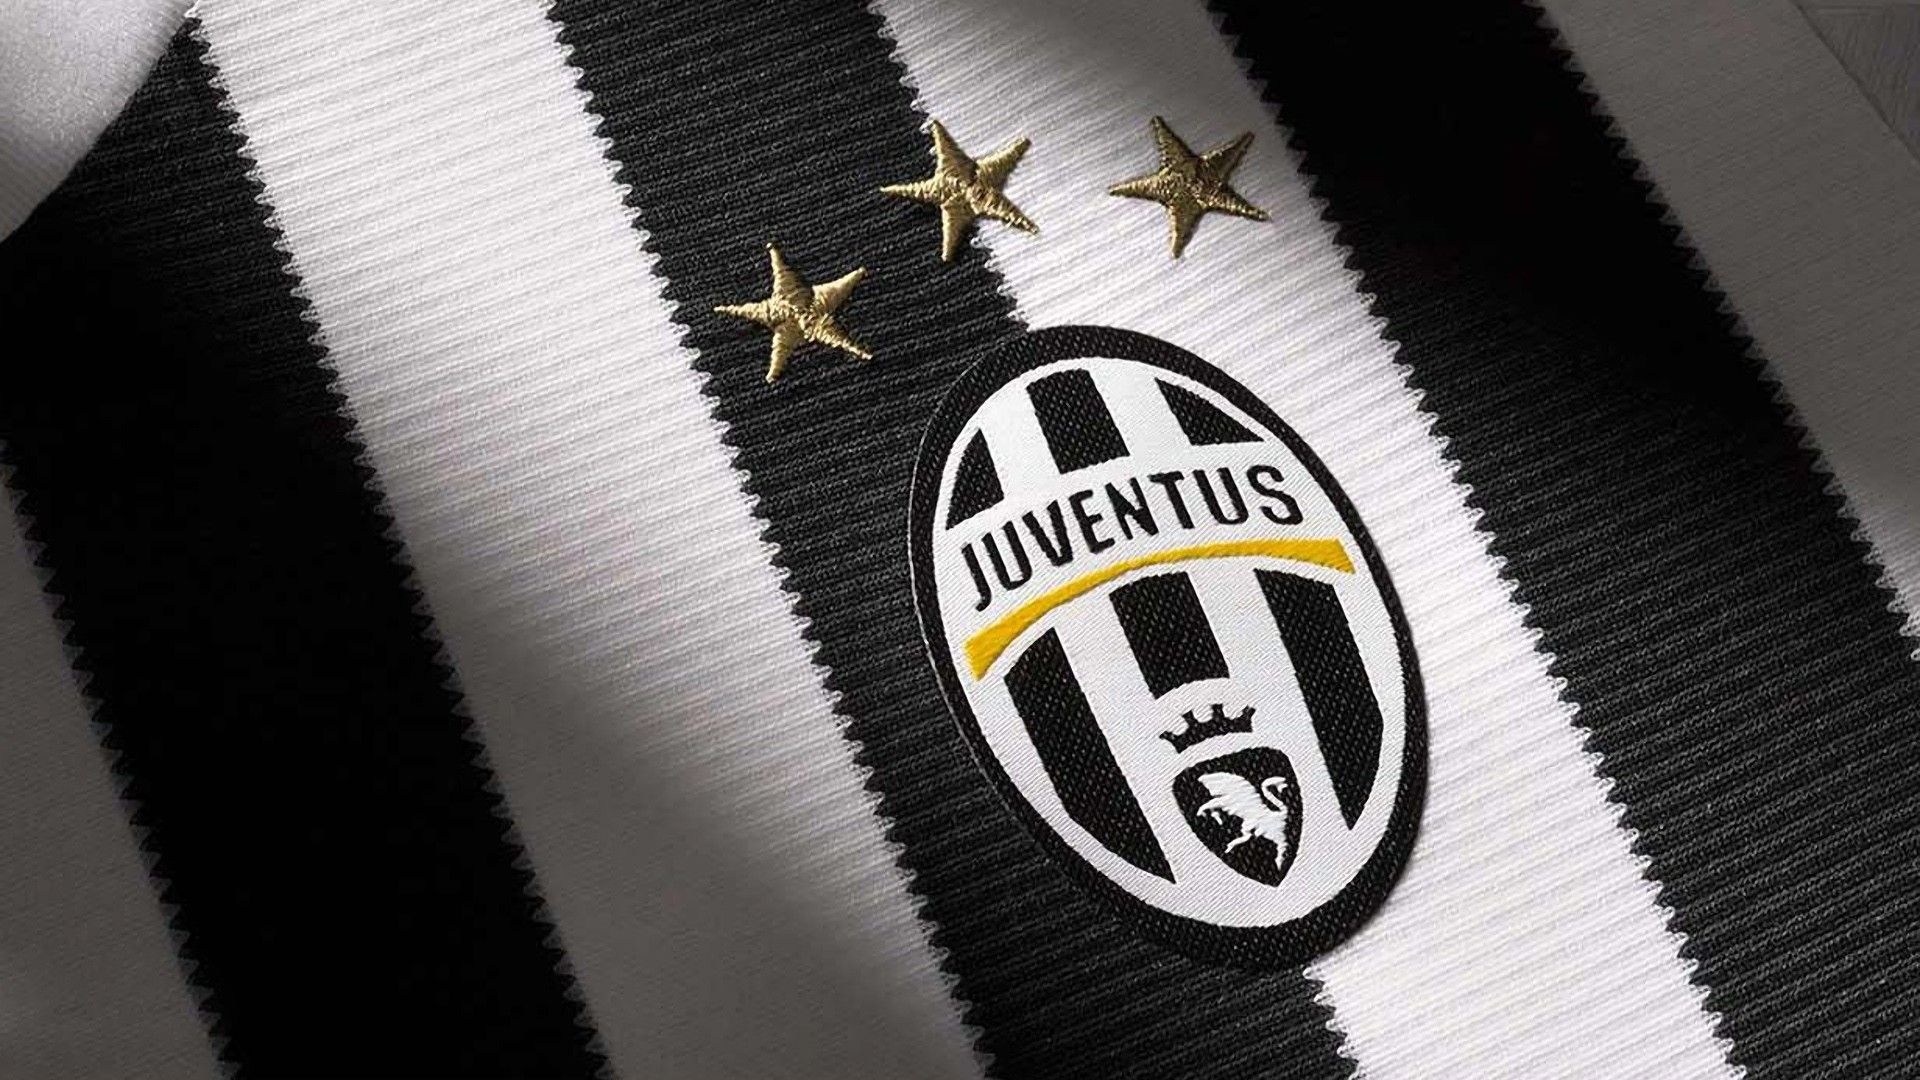 Juventus Logo, Adidas wallpapers, Sports affiliation, Football apparel, 1920x1080 Full HD Desktop